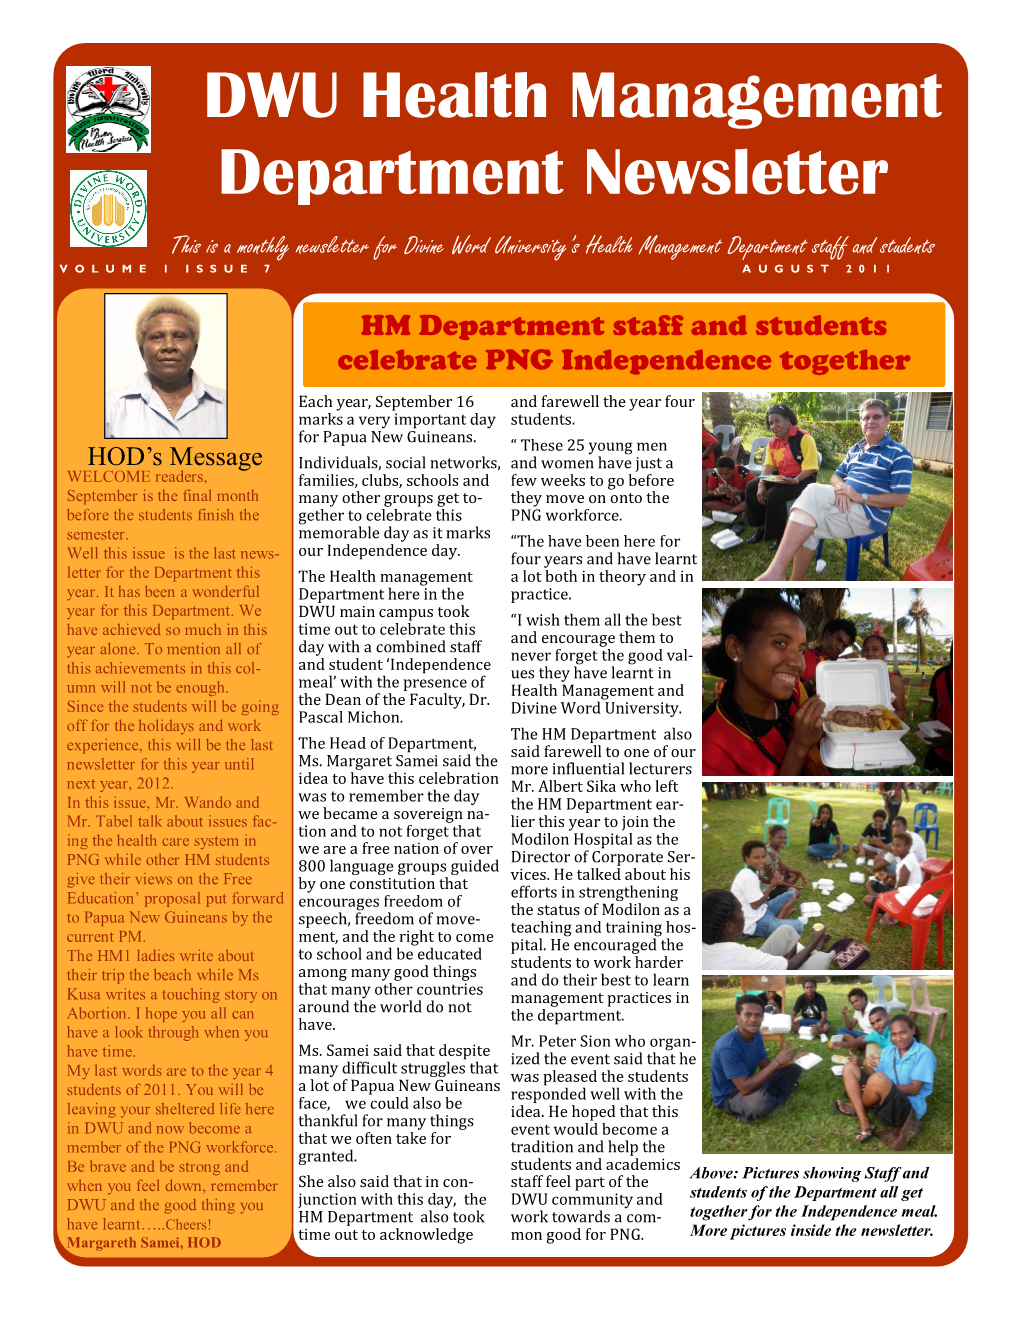 DWU Health Management Department Newsletter